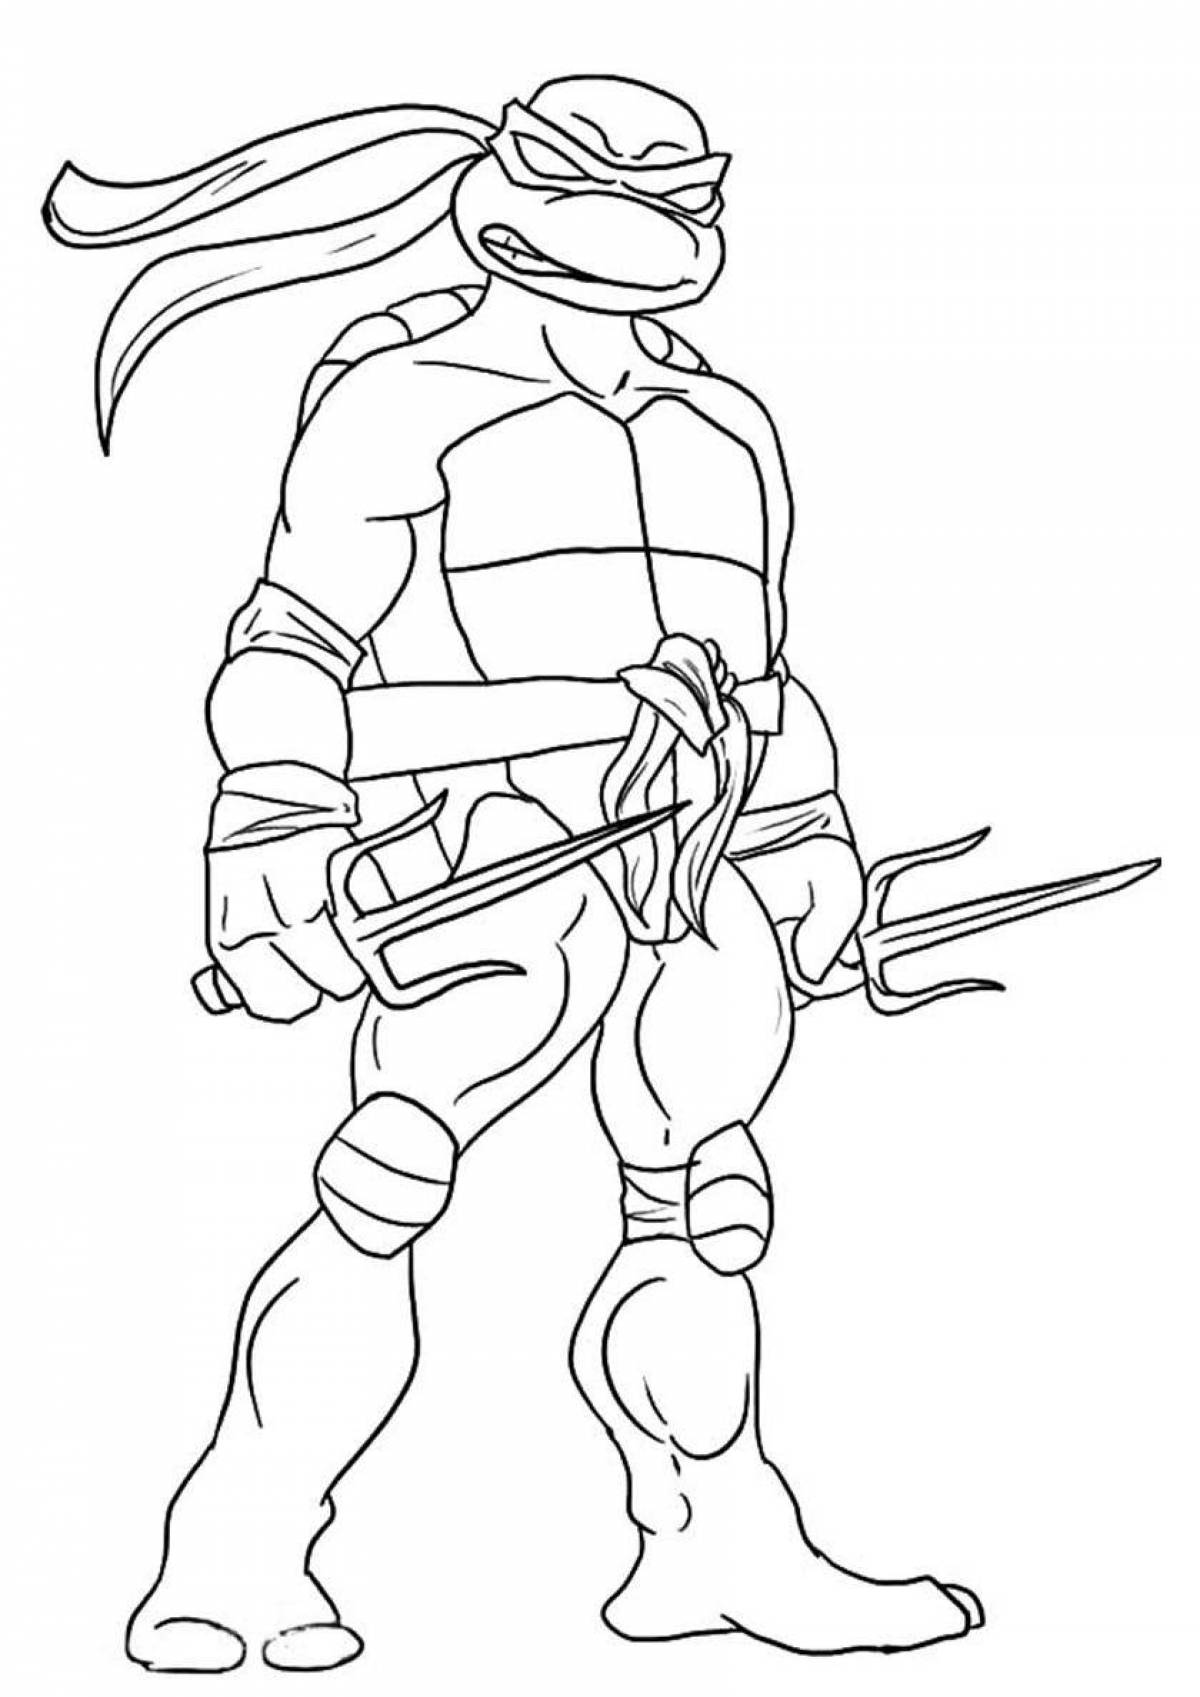 Raphael's outstanding Teenage Mutant Ninja Turtles